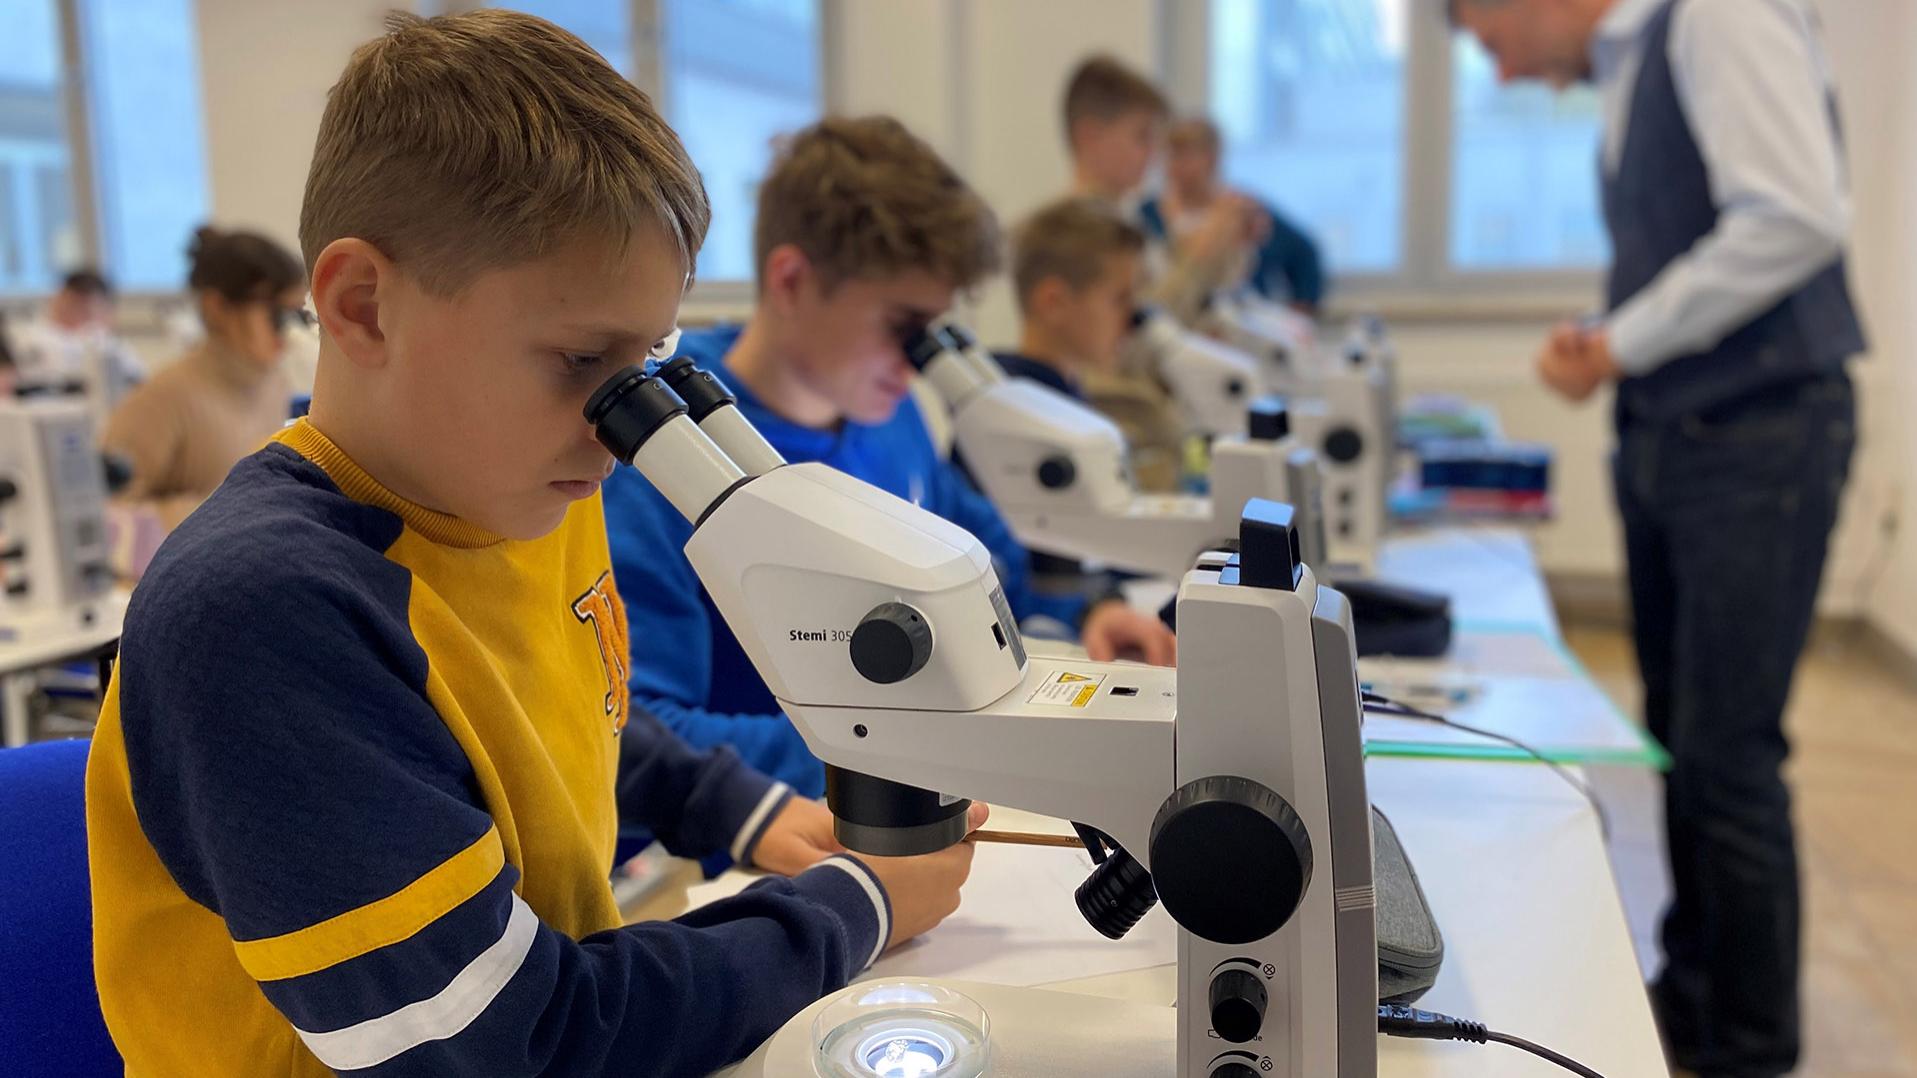 Schüler des Lyonel-Feininger-Gymnasiums beim Mikroskopieren an einem ZEISS Stemi 305 Mikroskop.